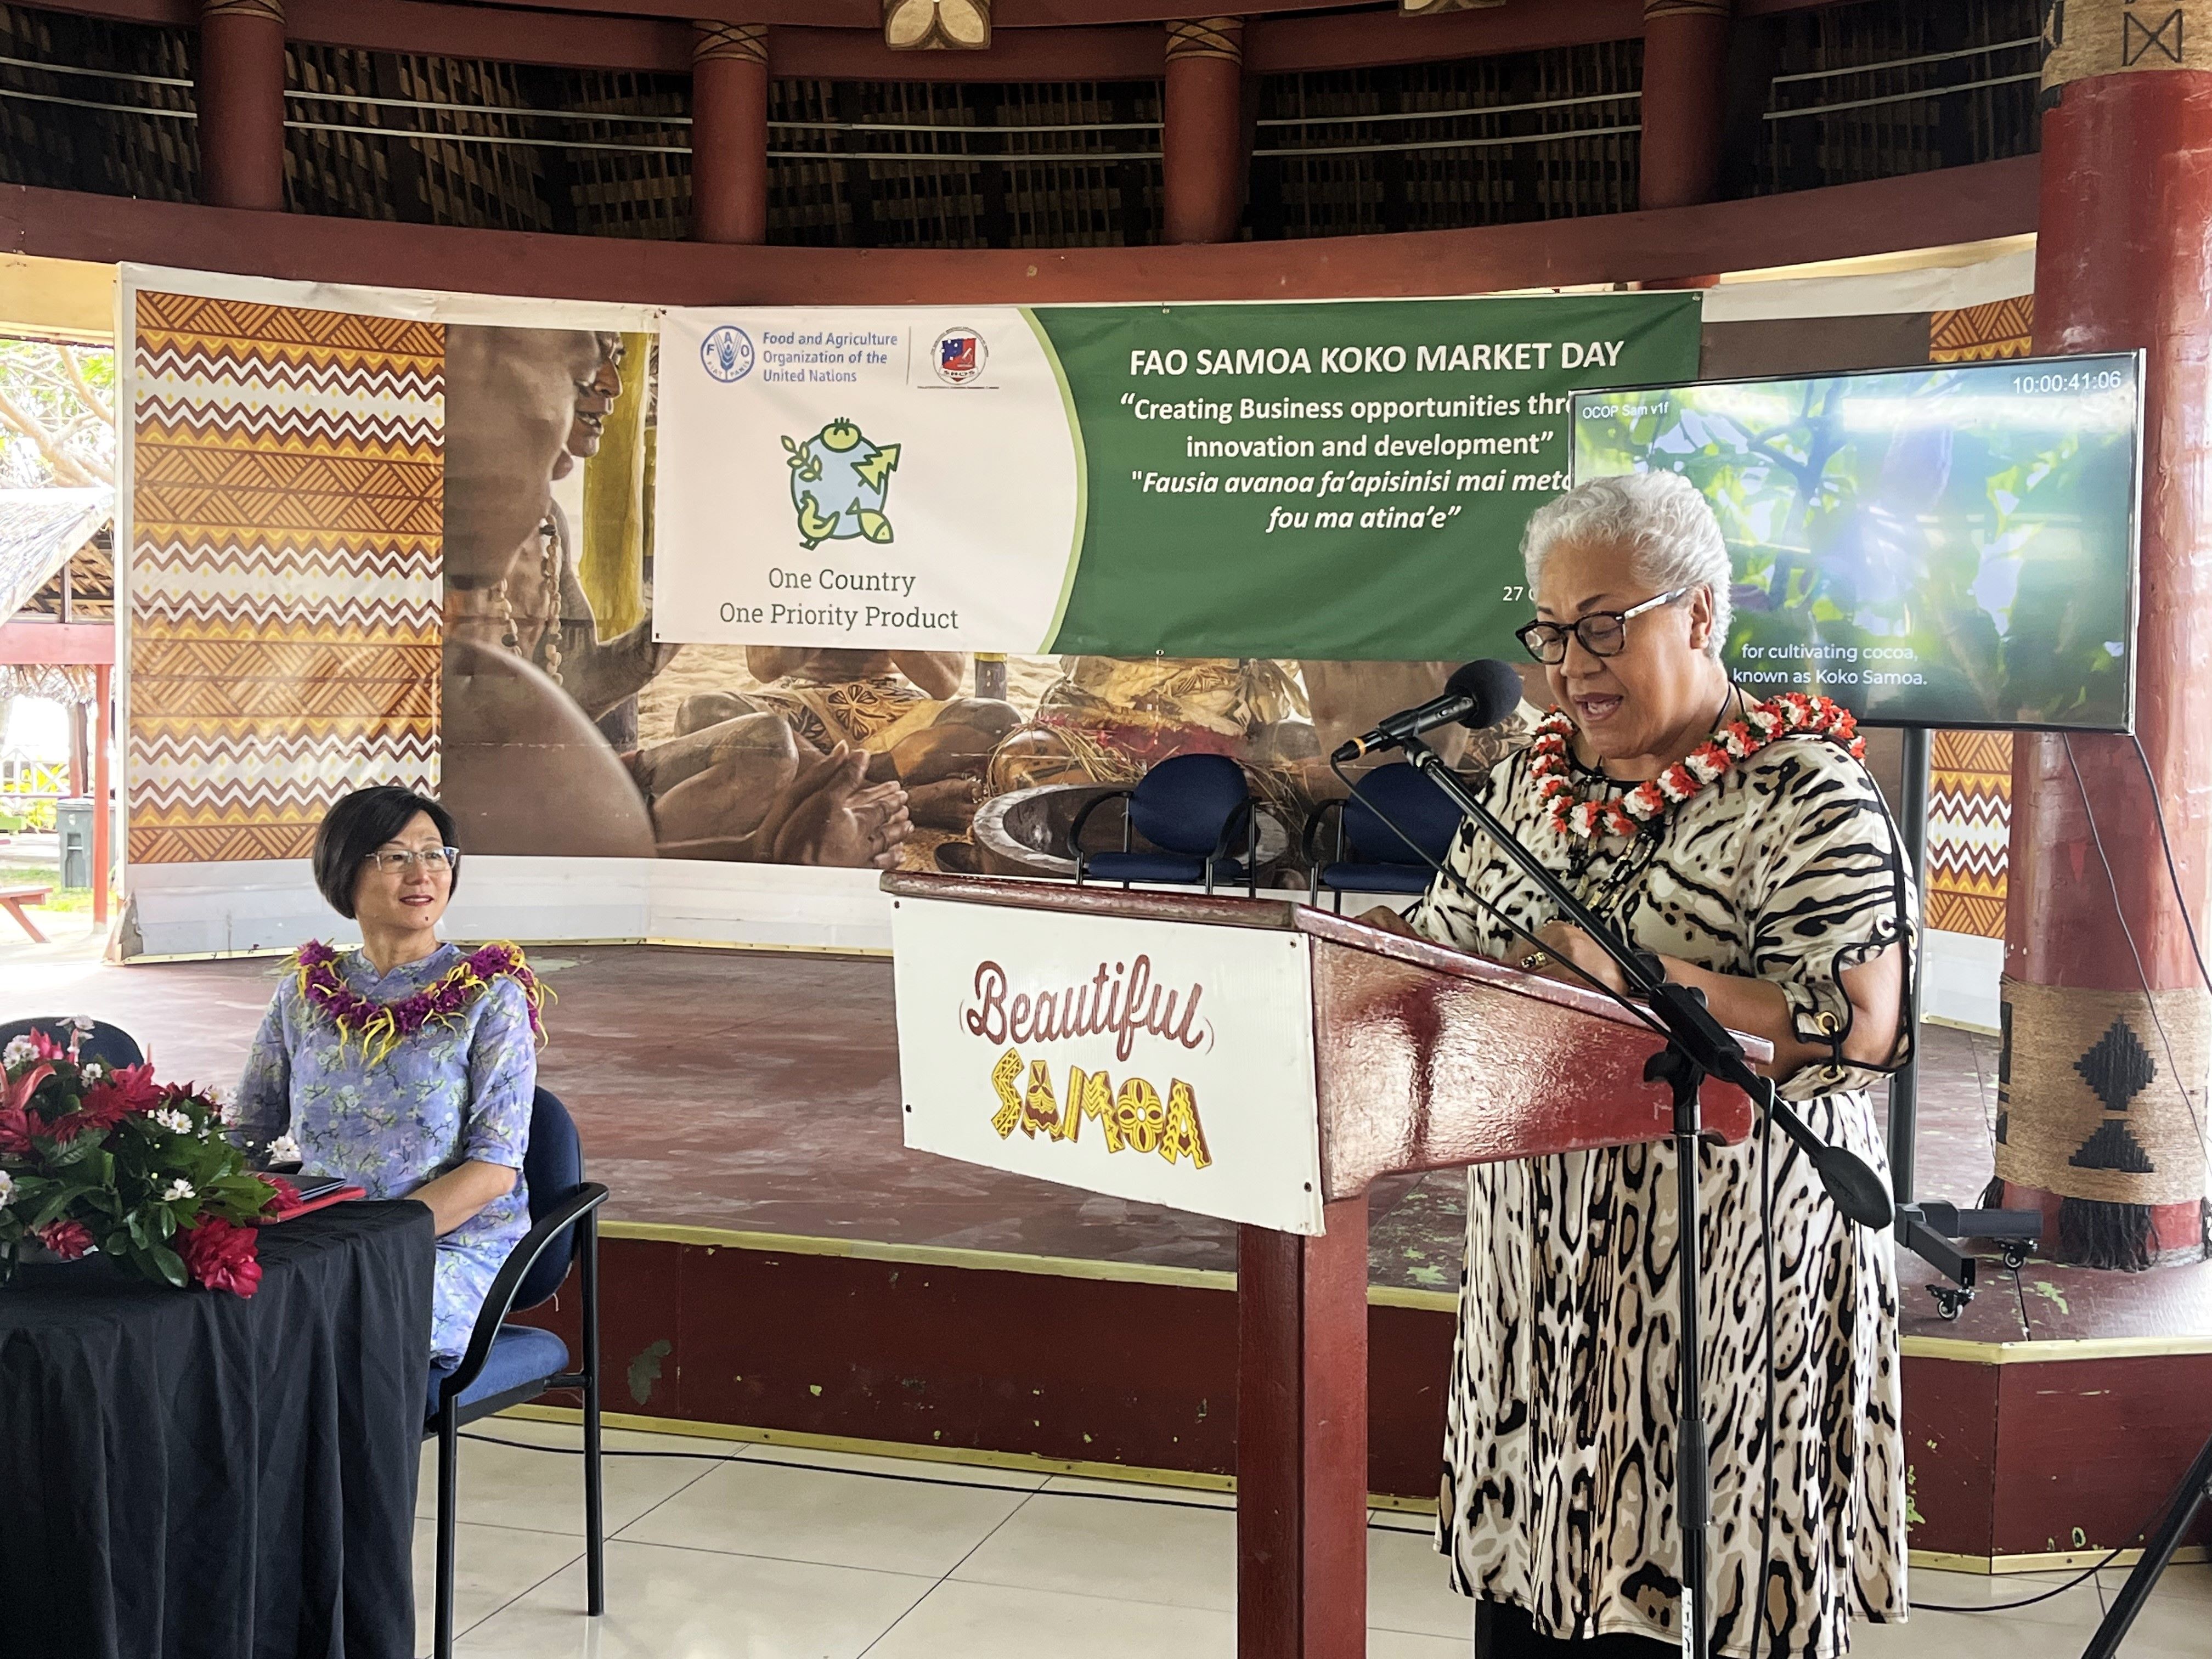 The Prime Minister of the Government of Samoa H.E Fiame Naomi Mataafa delivering her speech